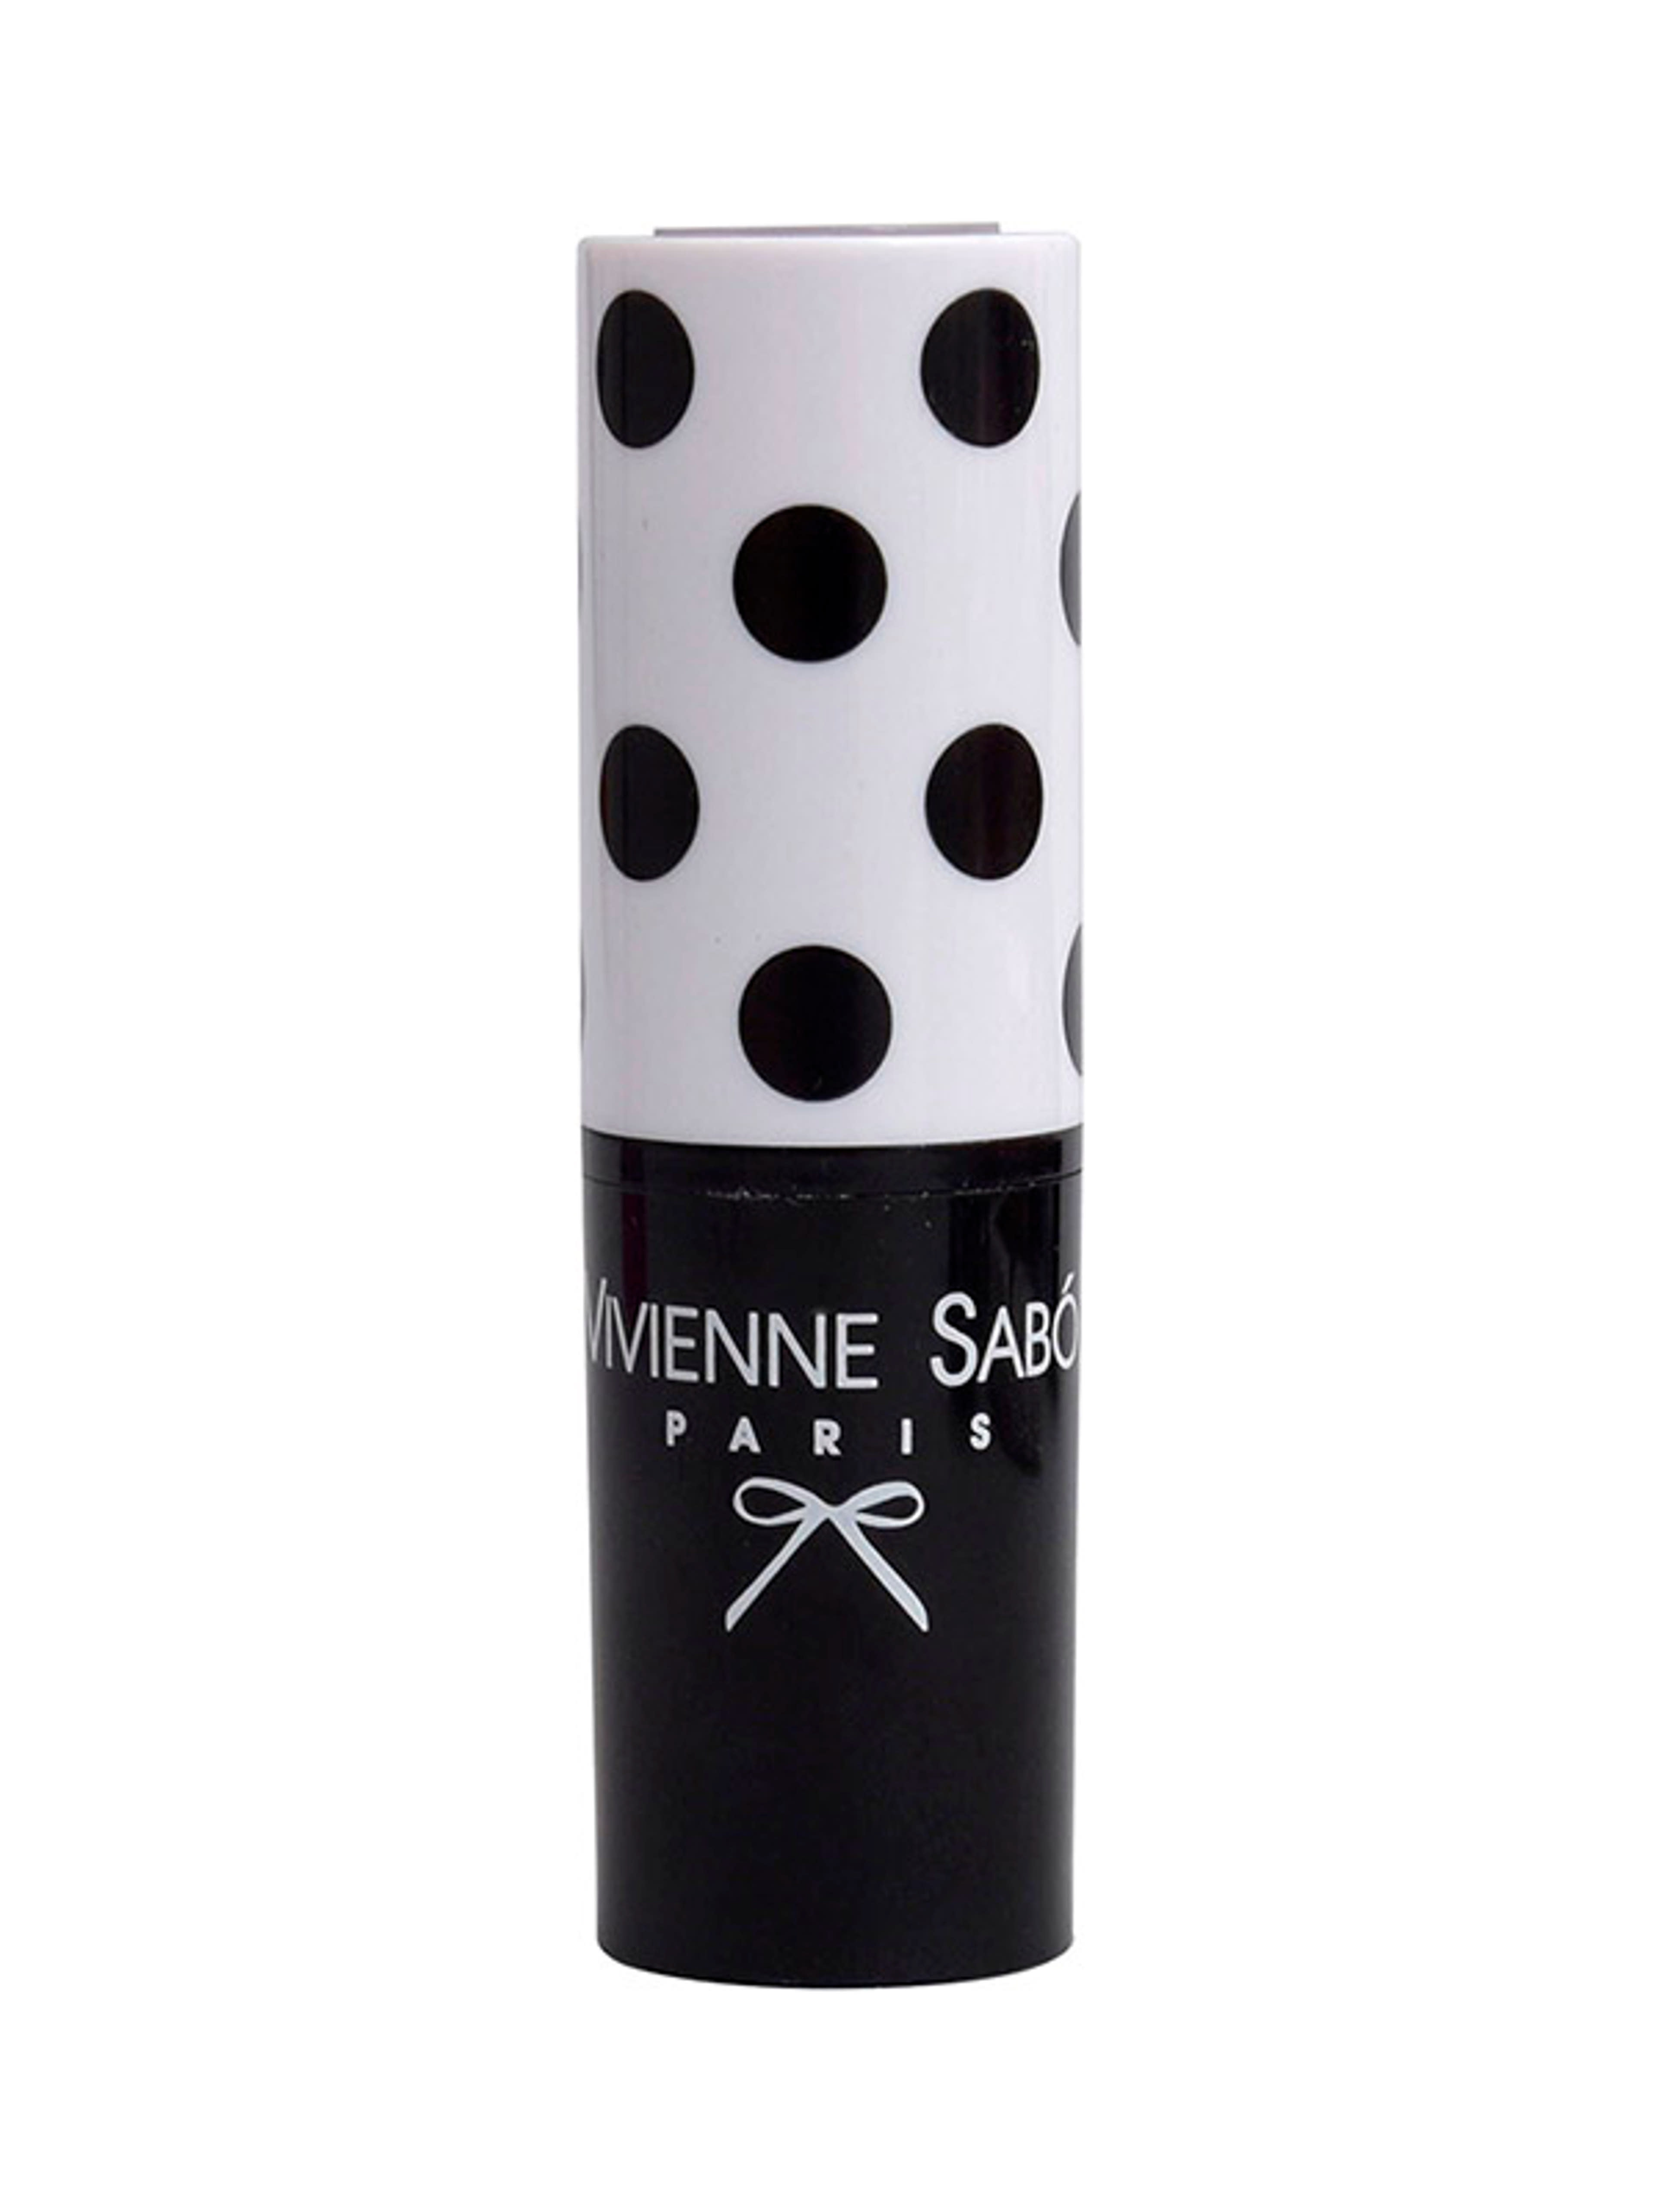 Vivienne Sabo rúzs merci 18 - 1 db-1